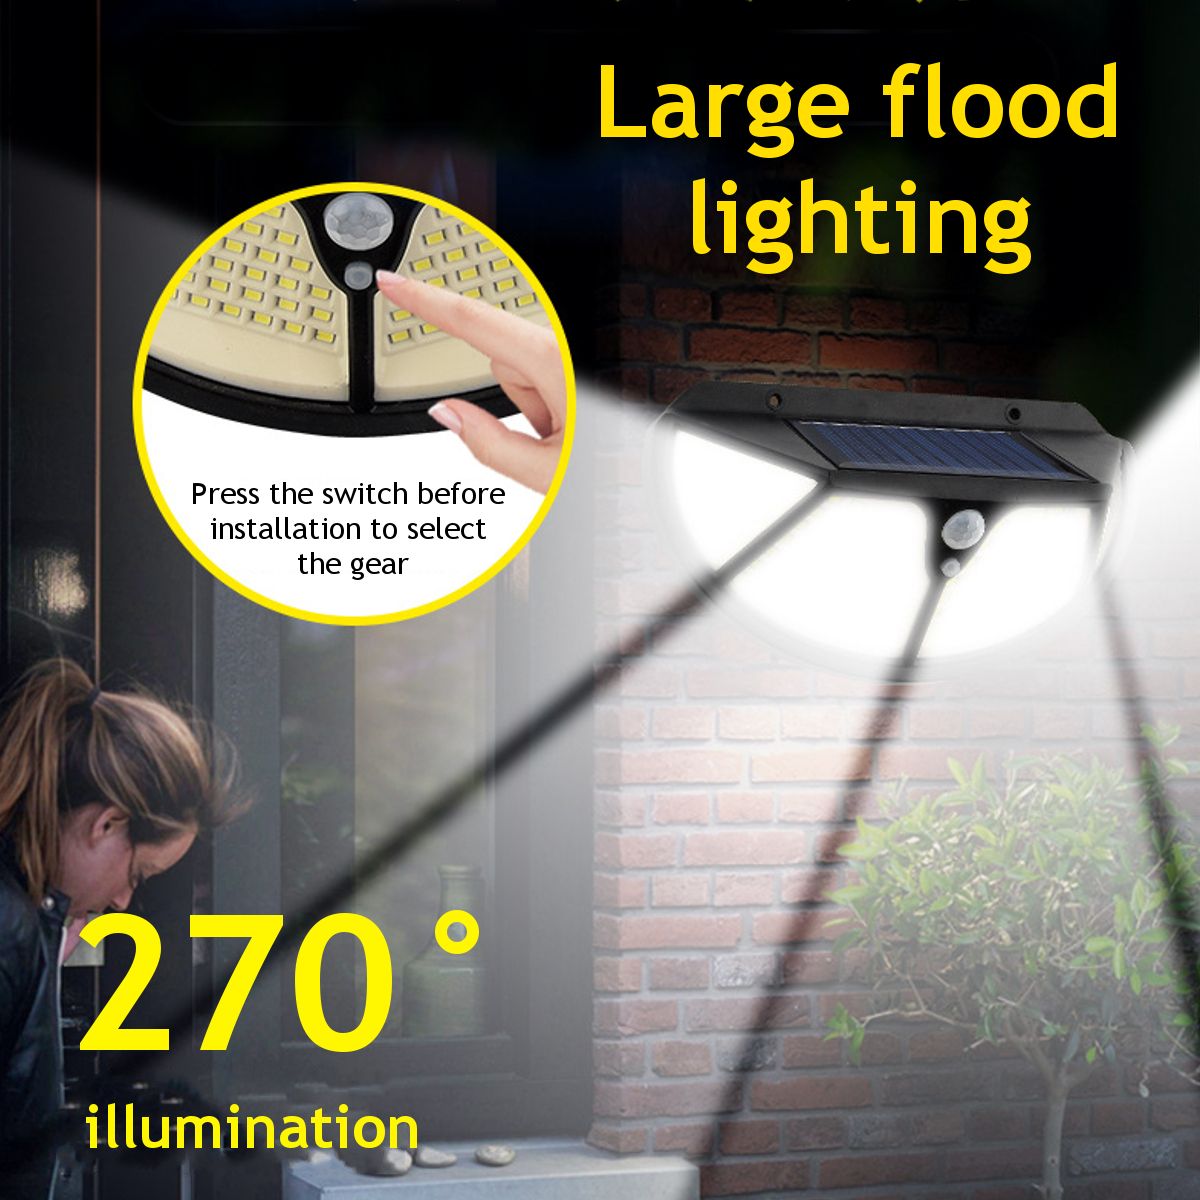 102LED-Solar-Power-Waterproof-PIR-Motion-Sensor-Wall-Light-Outdoor-Garden-Lamp-for-Outdoor-Use-1769998